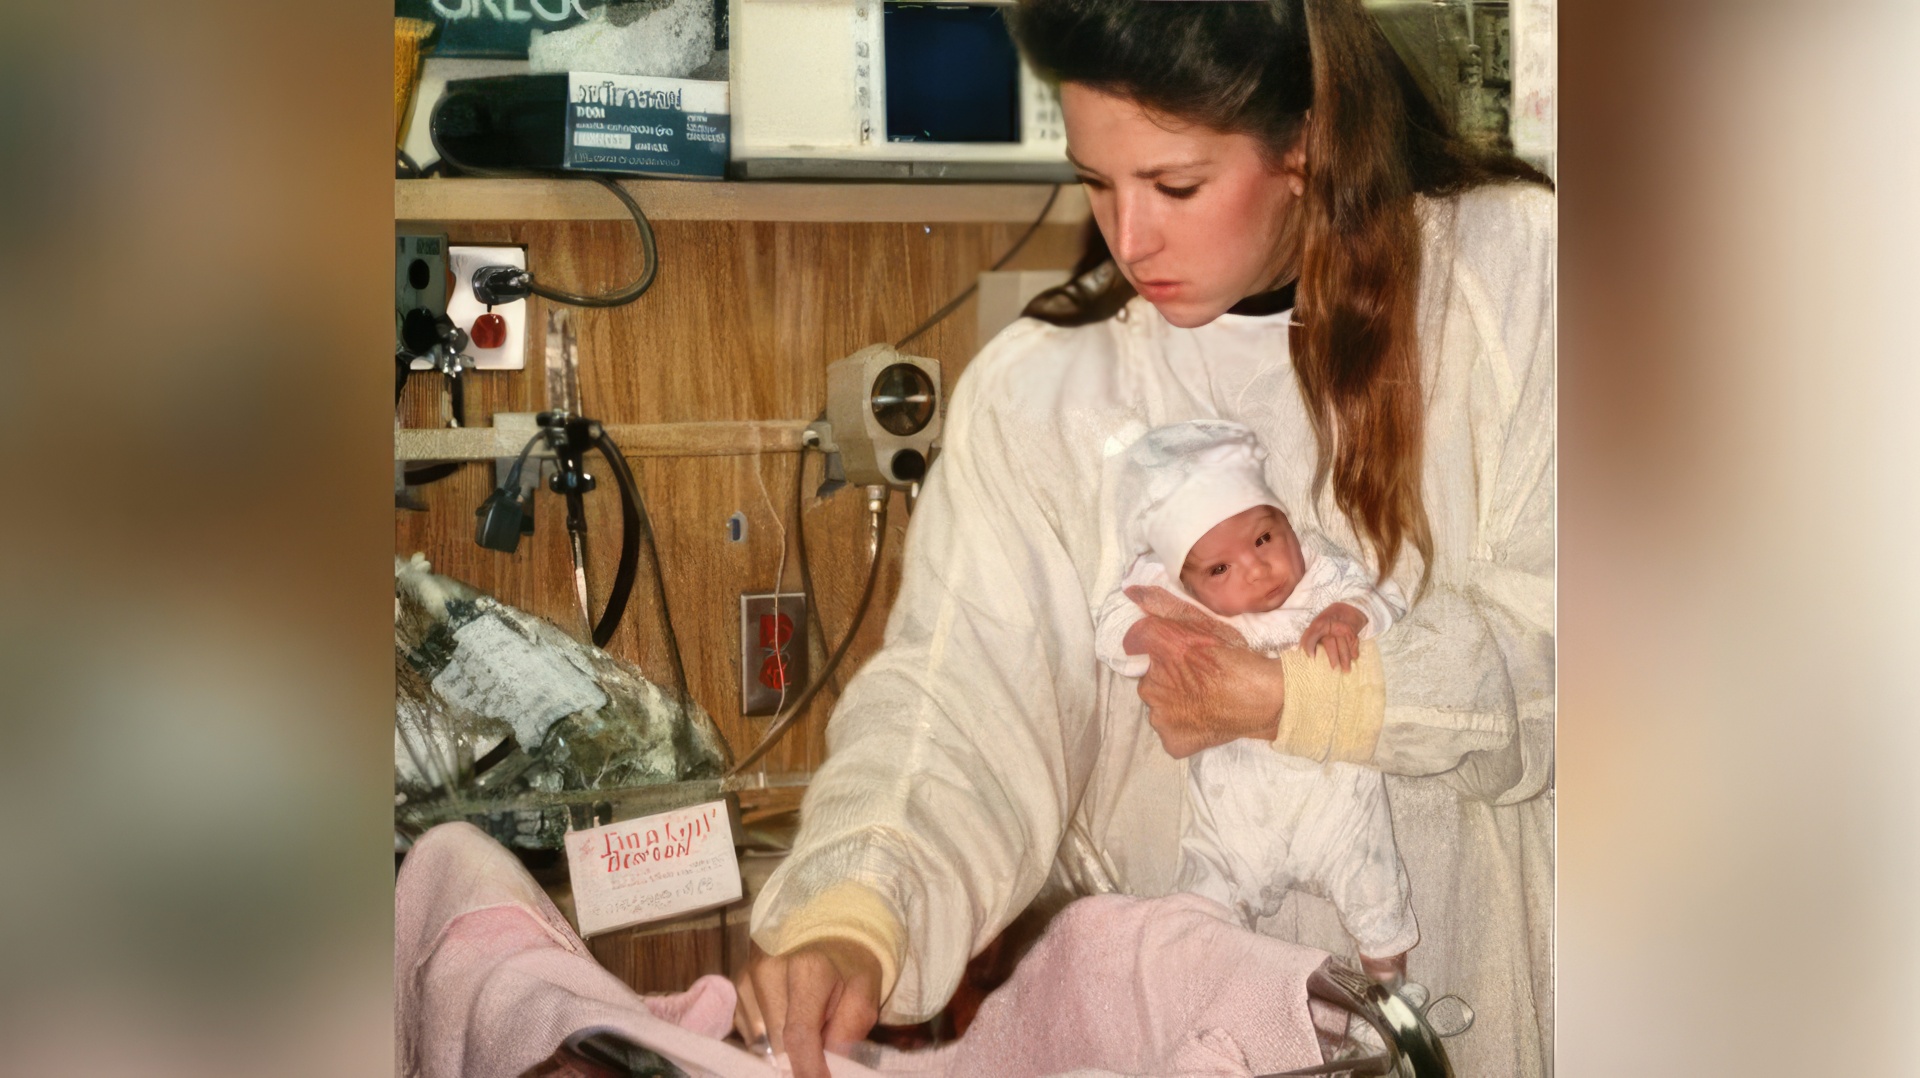 Newborn Ashley Benson with her mom